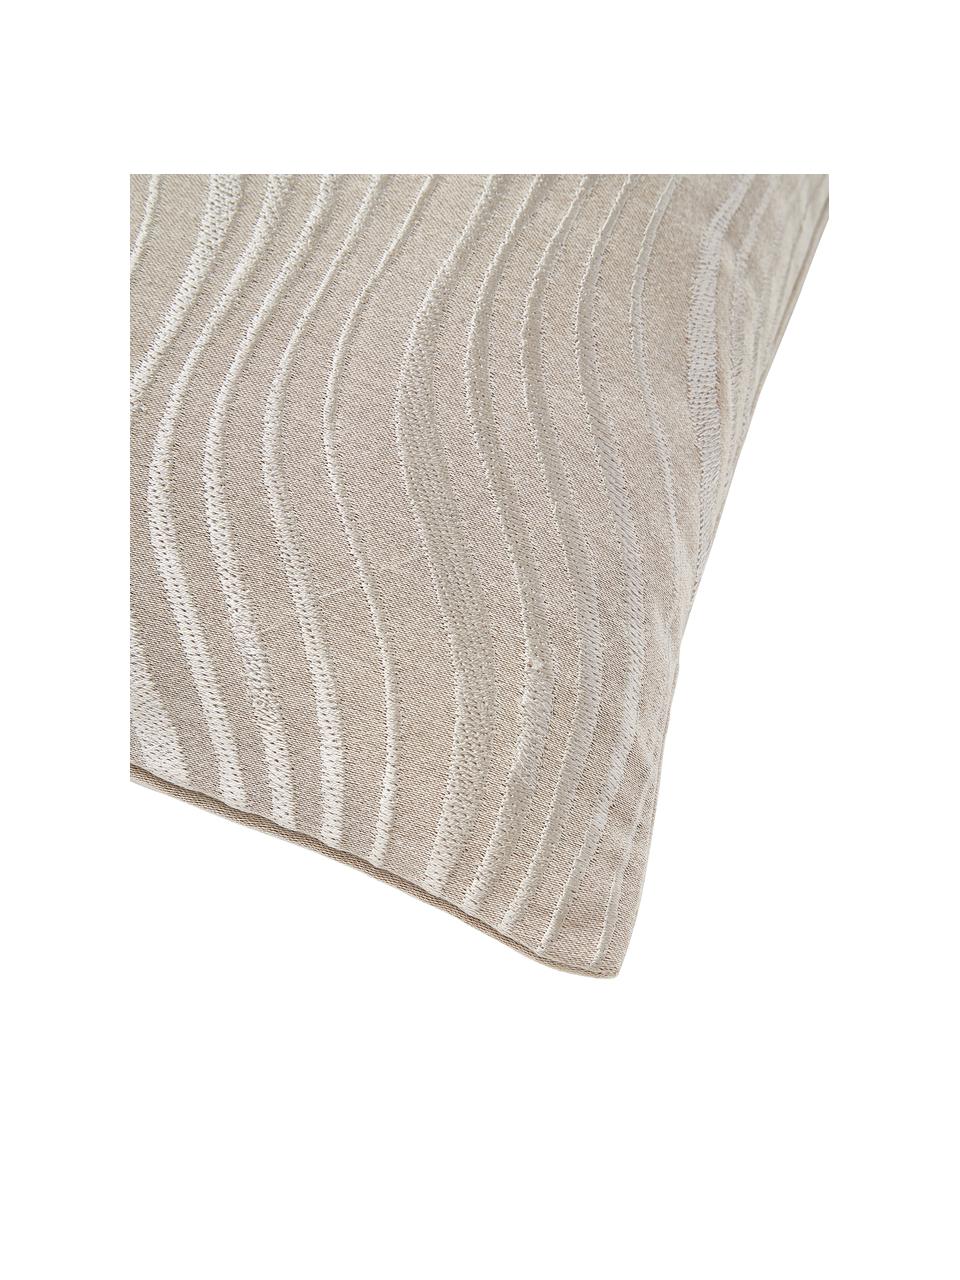 Funda de cojín bordada de satén Nico, 100% algodón satinado, Gris pardo, An 45 x L 45 cm